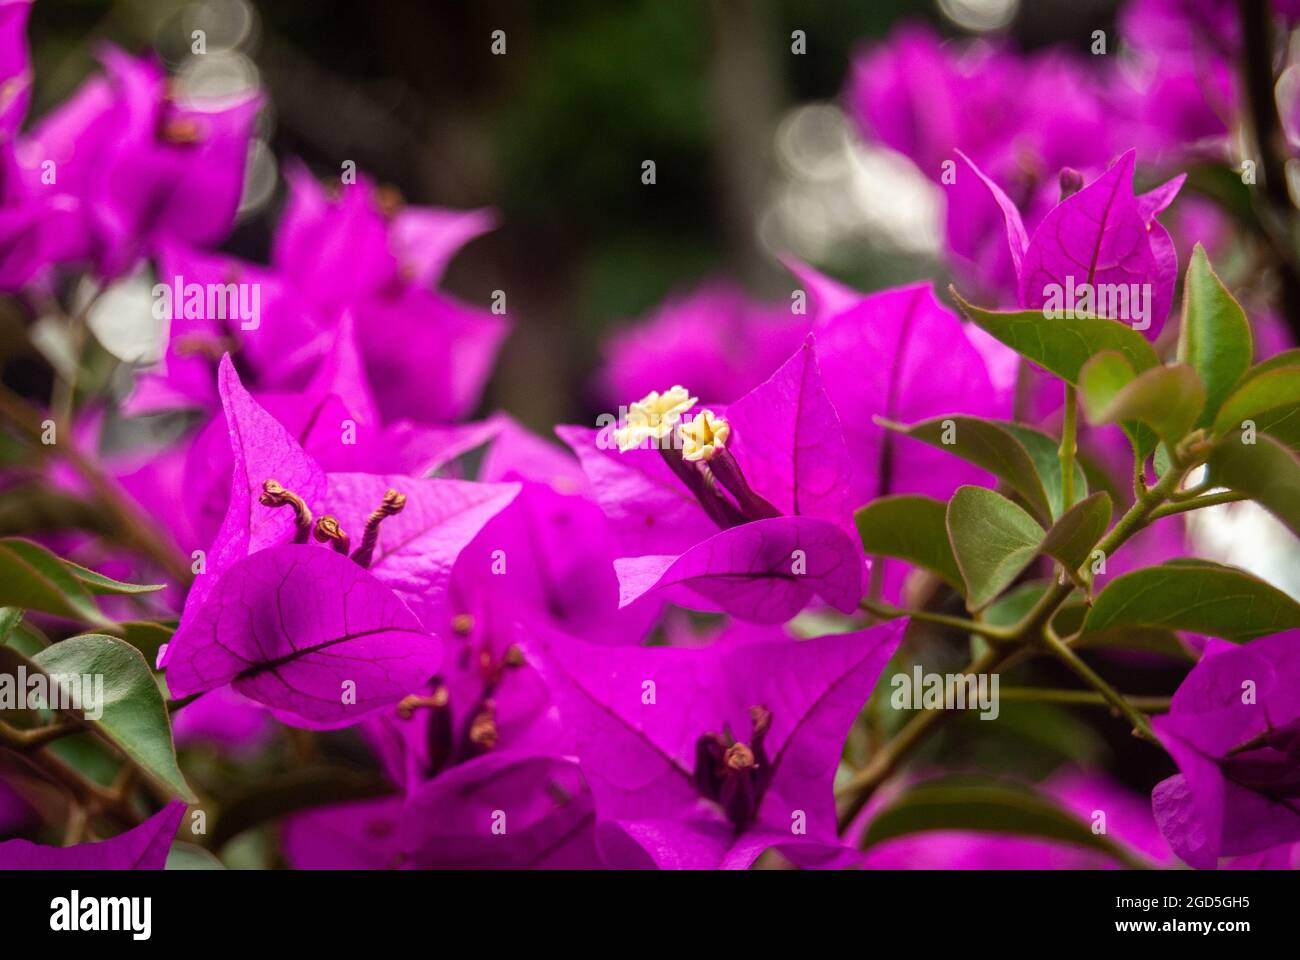 Nahaufnahme der violetten Bougainvillea Glabra Blooming - Makro, selektiver Fokus. Stockfoto